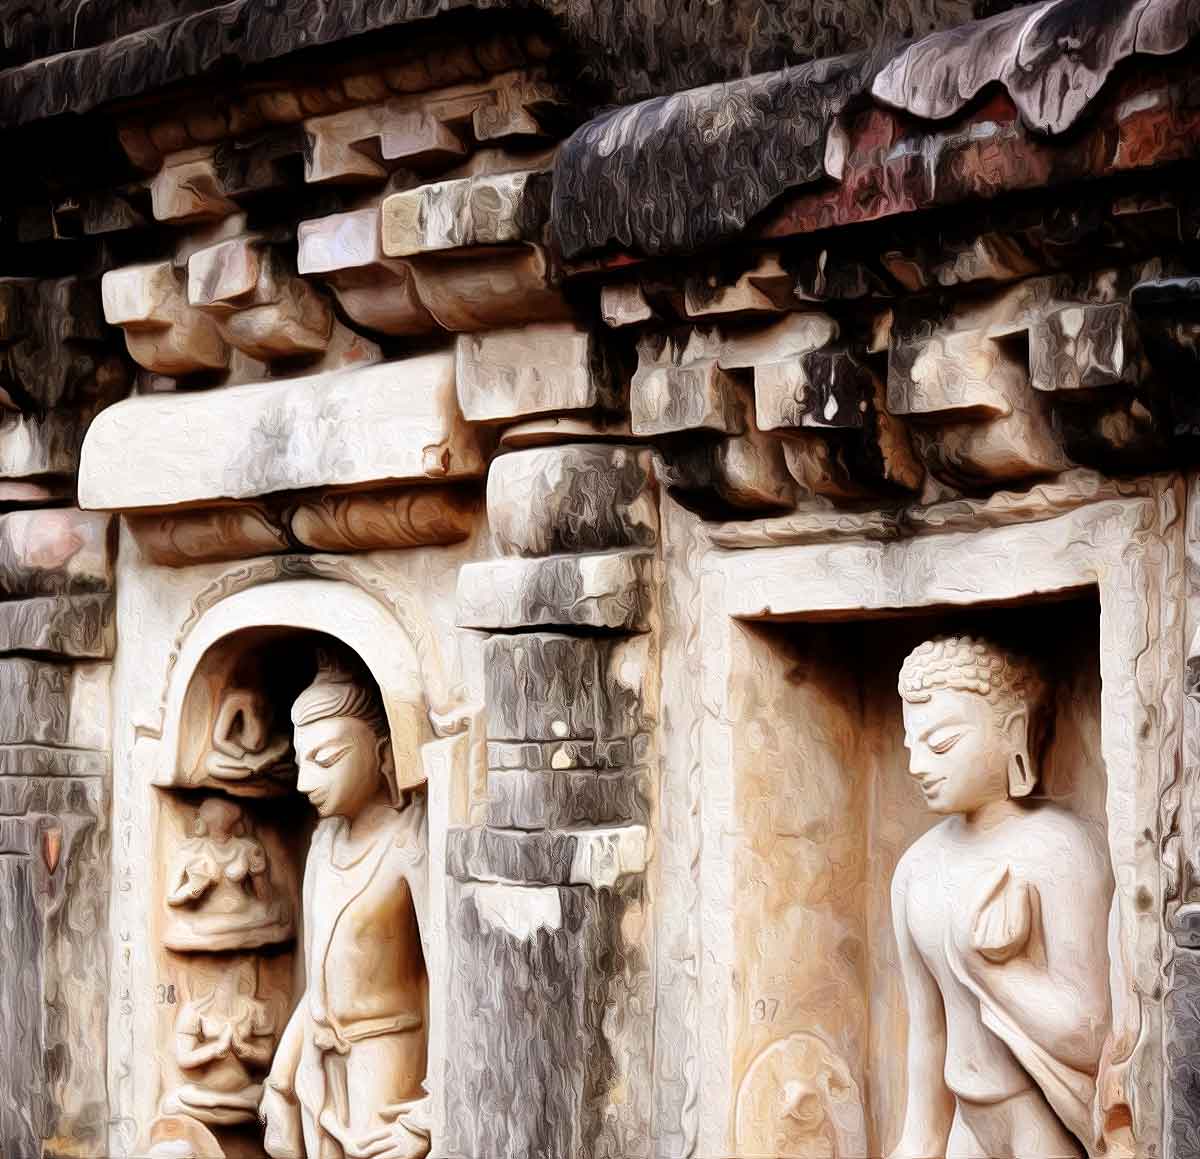 How history was made up at Nalanda - The story behind a Marxist historian’s story of its destruction by ‘Hindu fanatics’